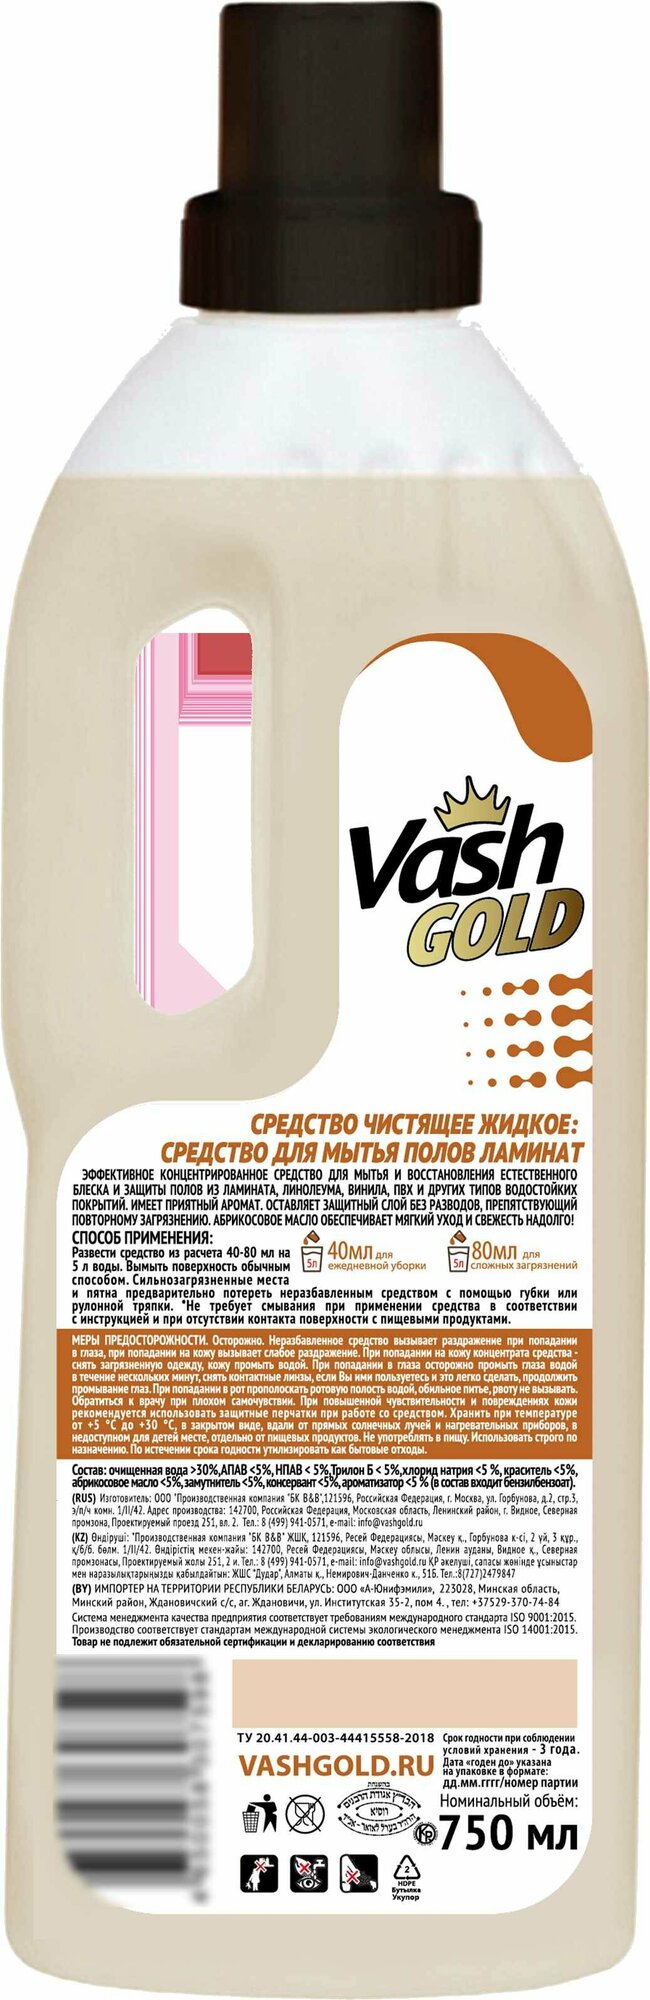 Средство для мытья ламината Vash Gold 750 мл - фото №5